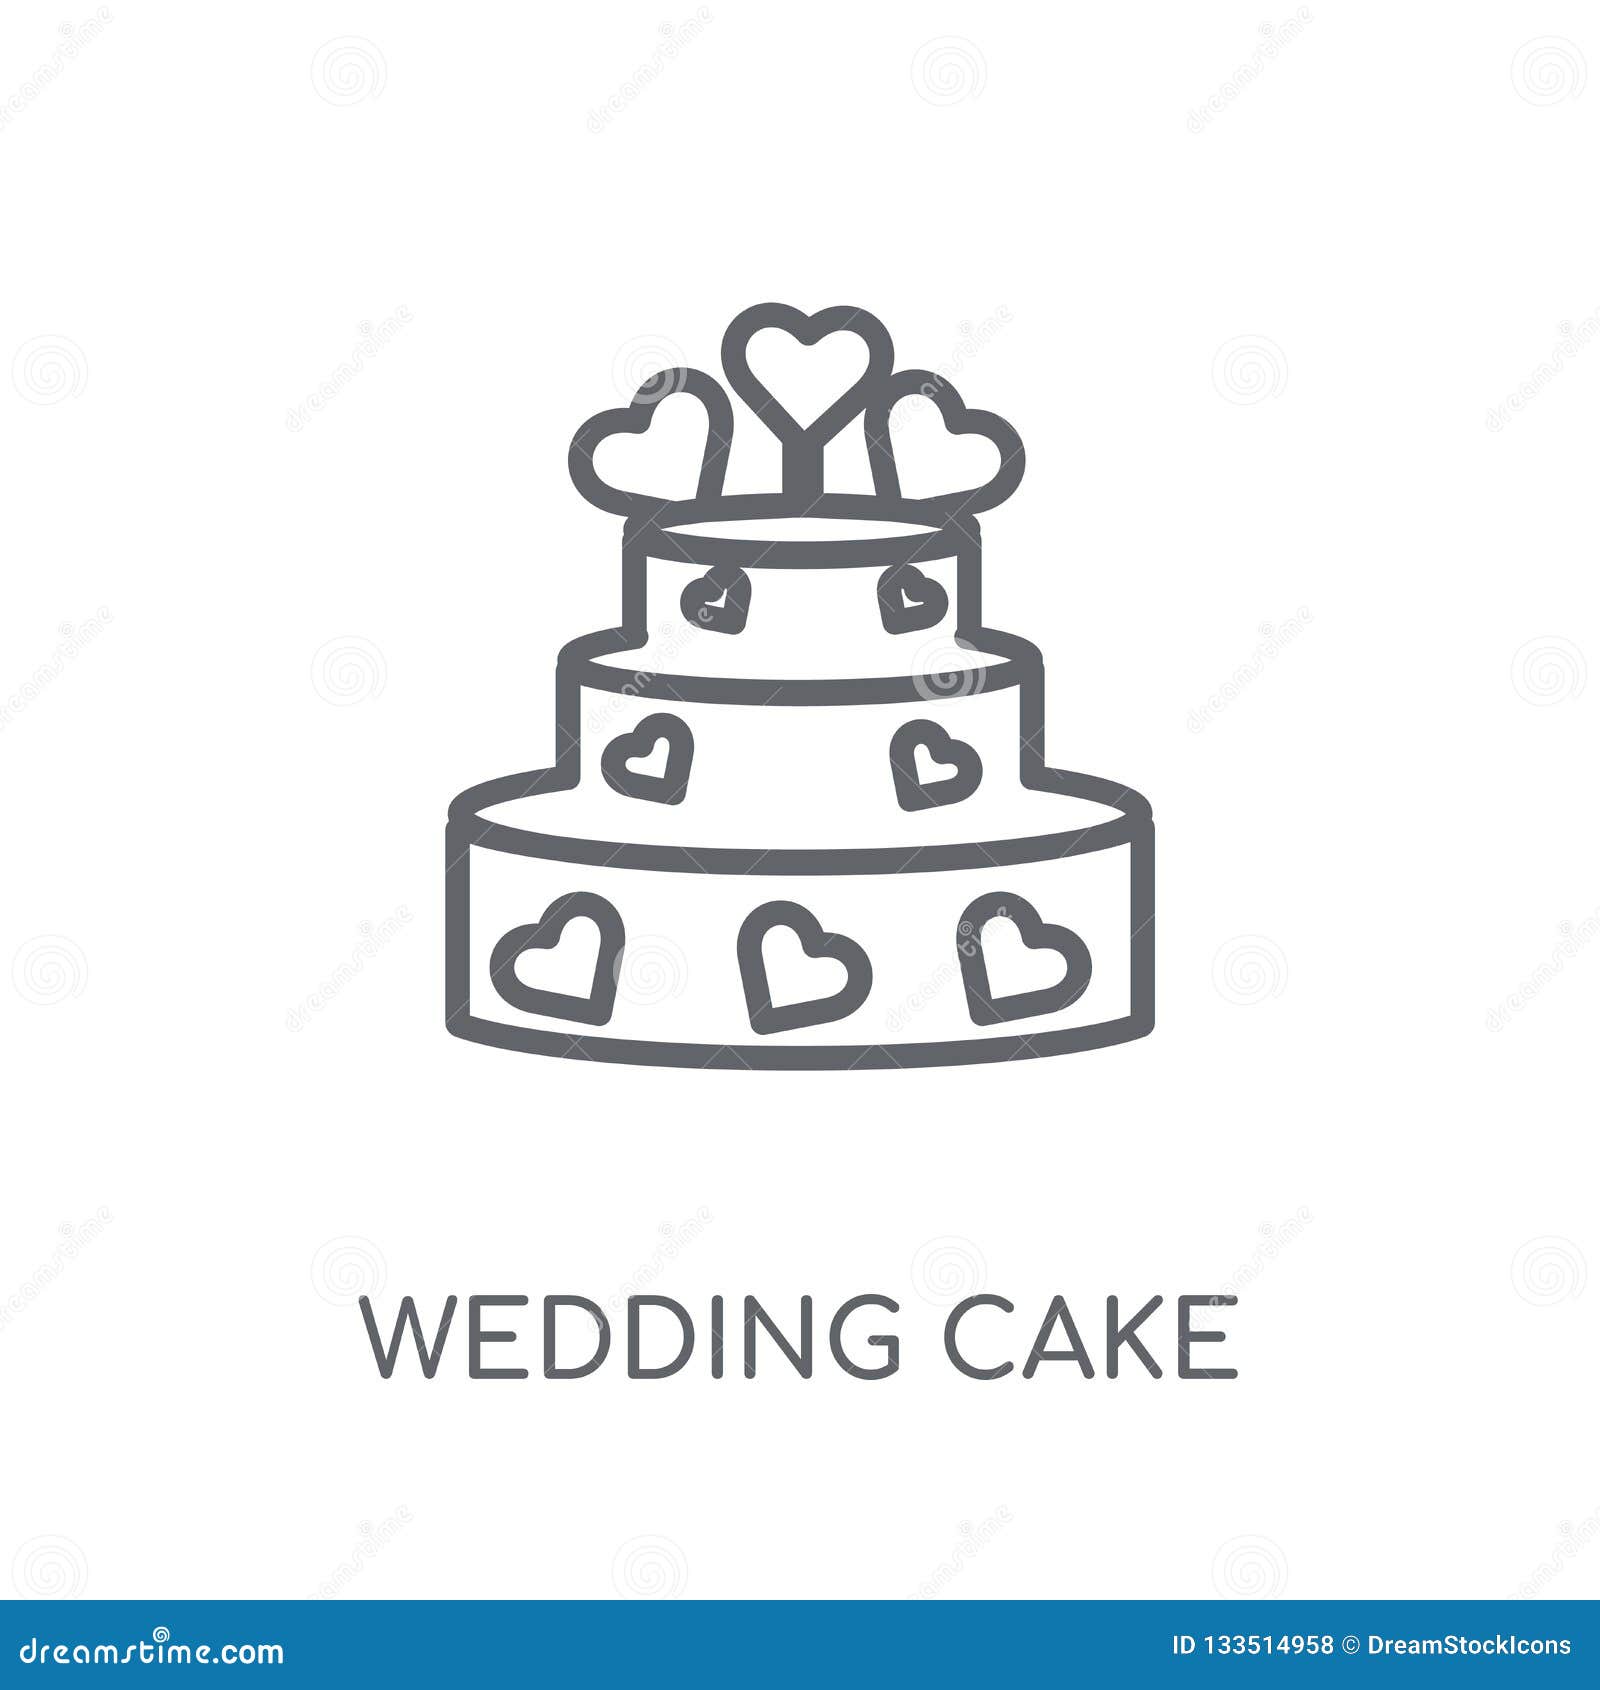 Modern Cake Logo Images